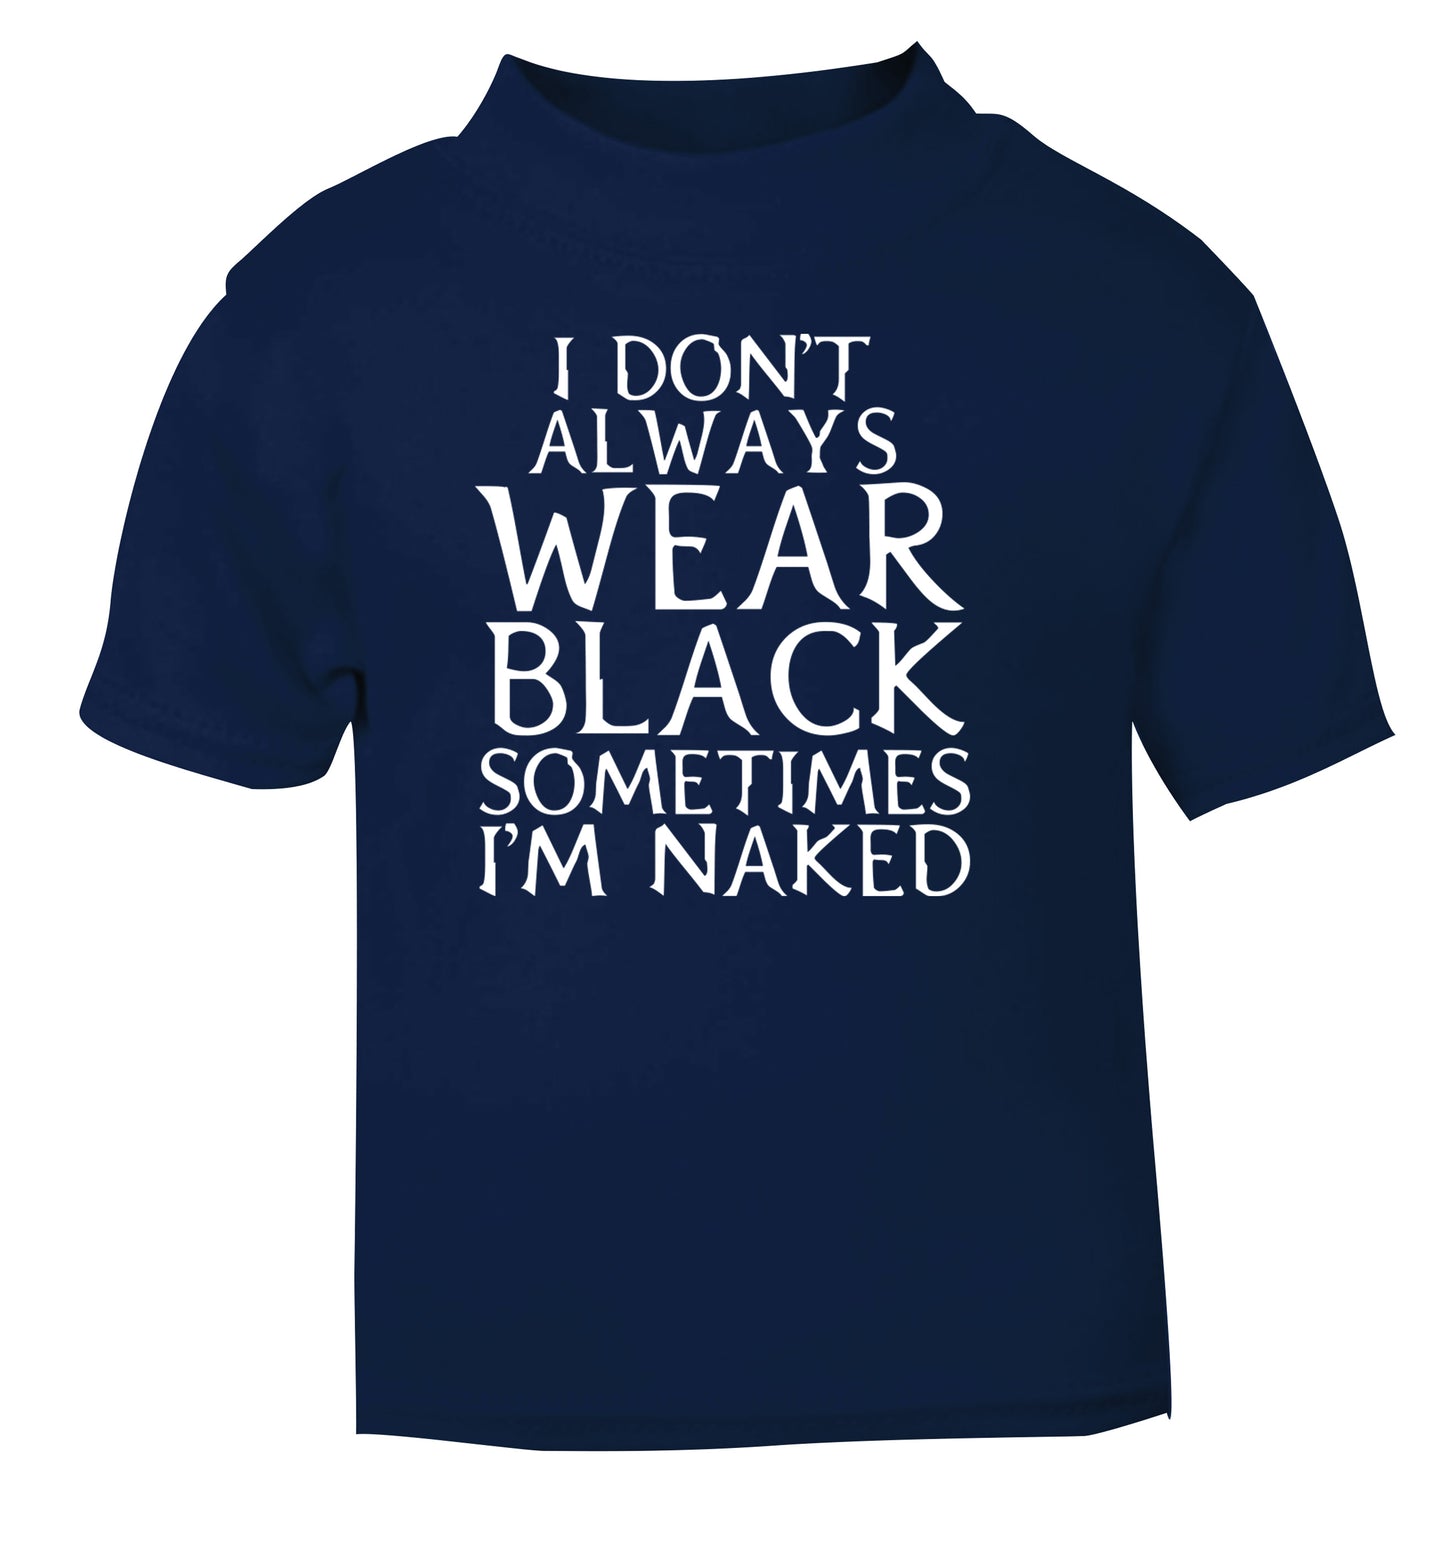 I don't always wear black sometimes I'm naked navy Baby Toddler Tshirt 2 Years